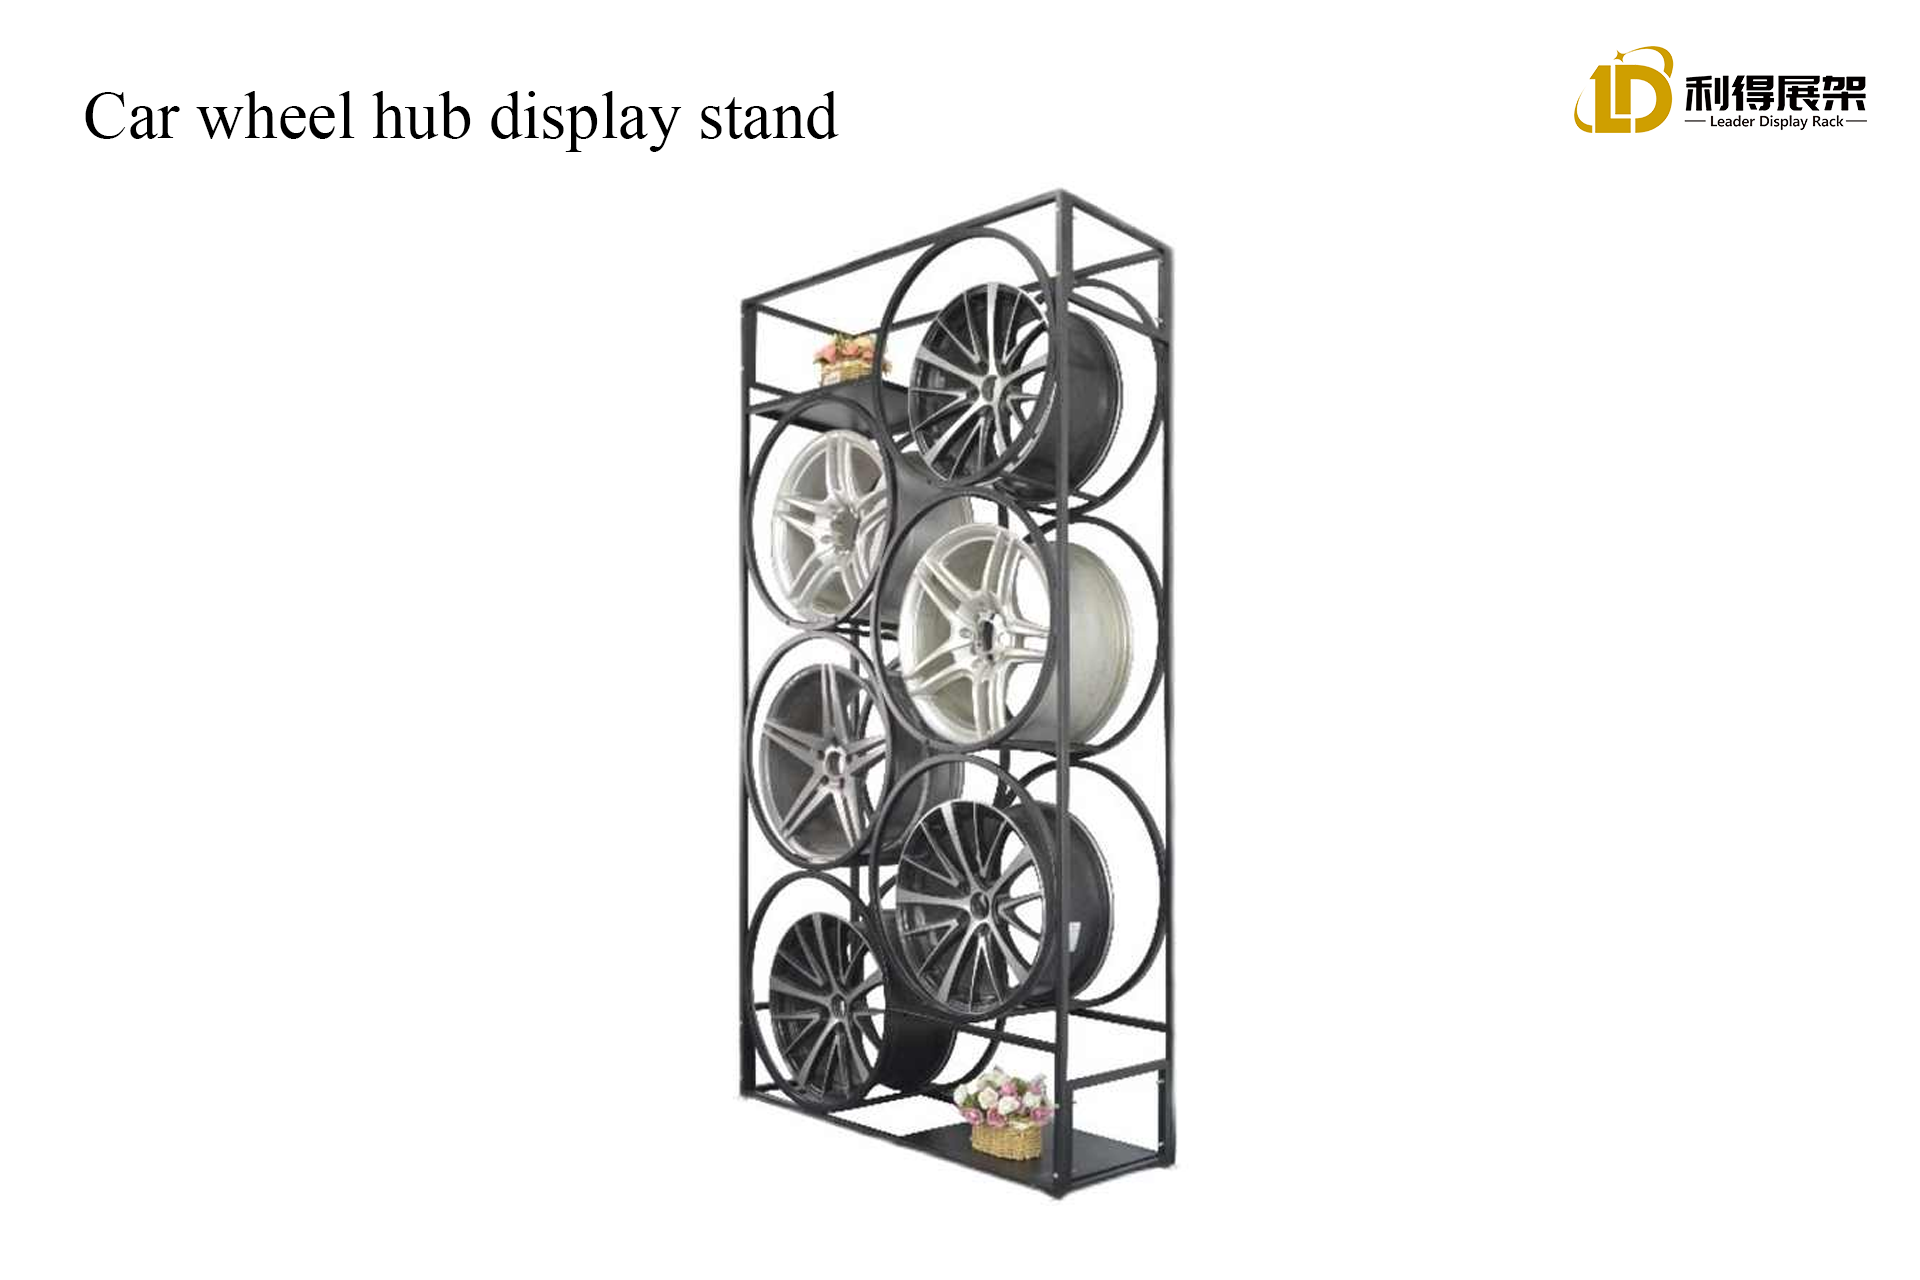 Car wheel hub display stand